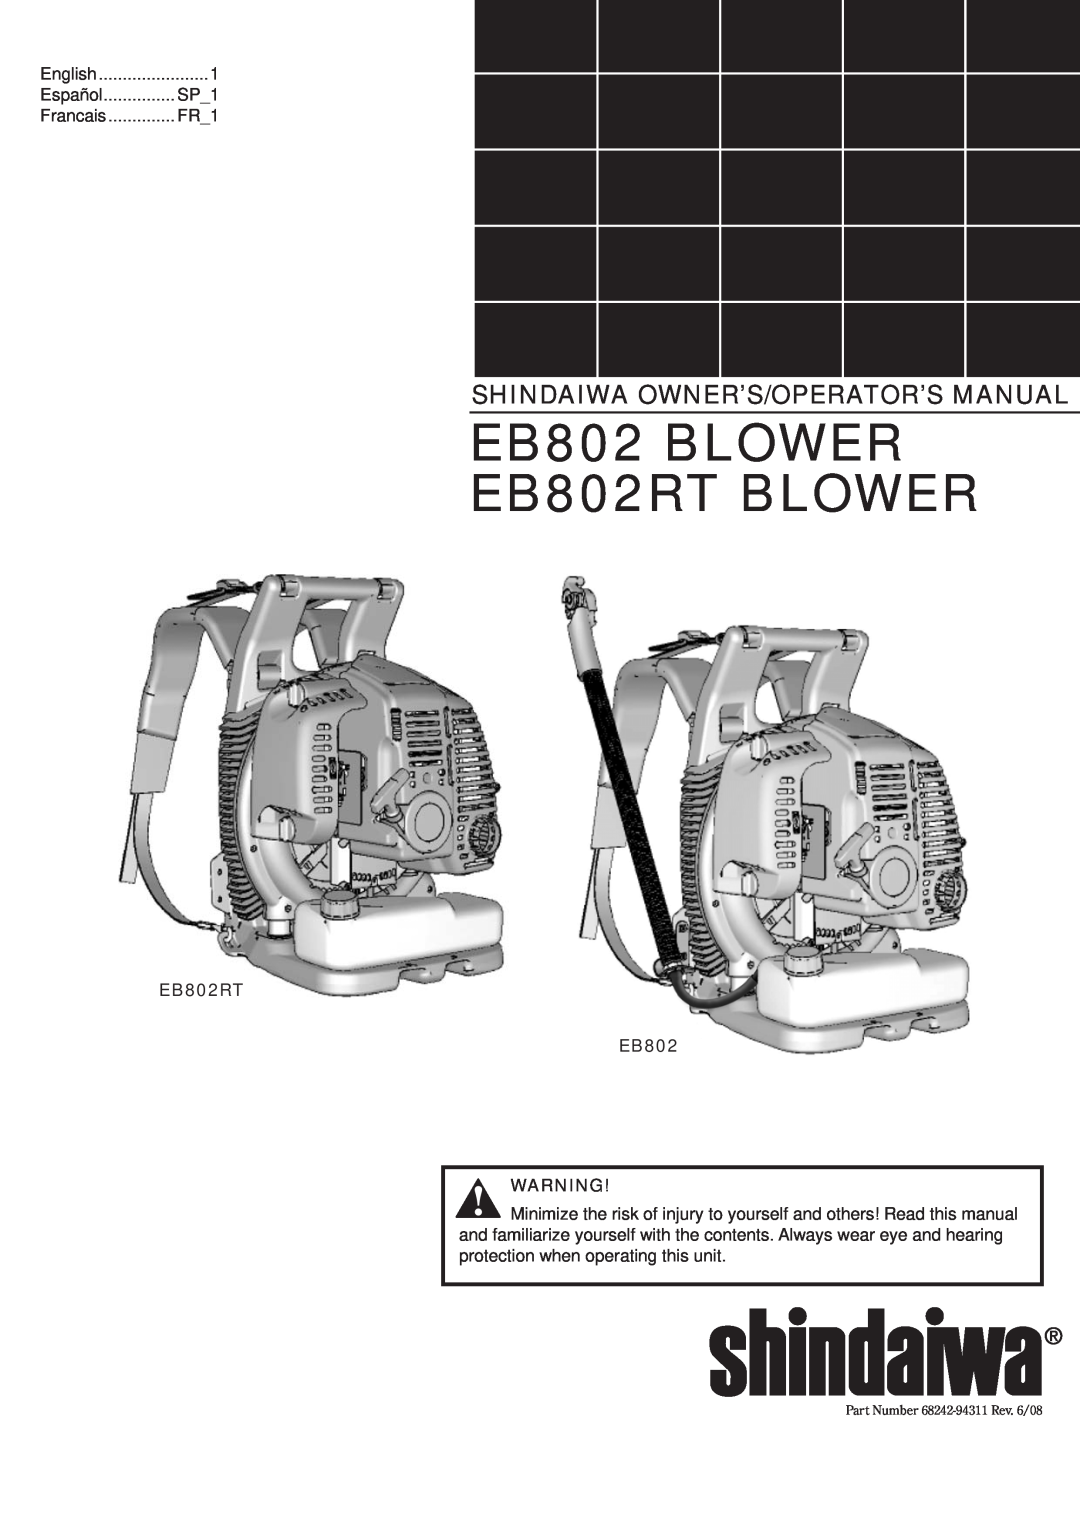 Shindaiwa 68242-94311 manual EB802 BLOWER EB802RT BLOWER, Shindaiwa Owner’S/Operator’S Manual, EB802RT EB802, English 